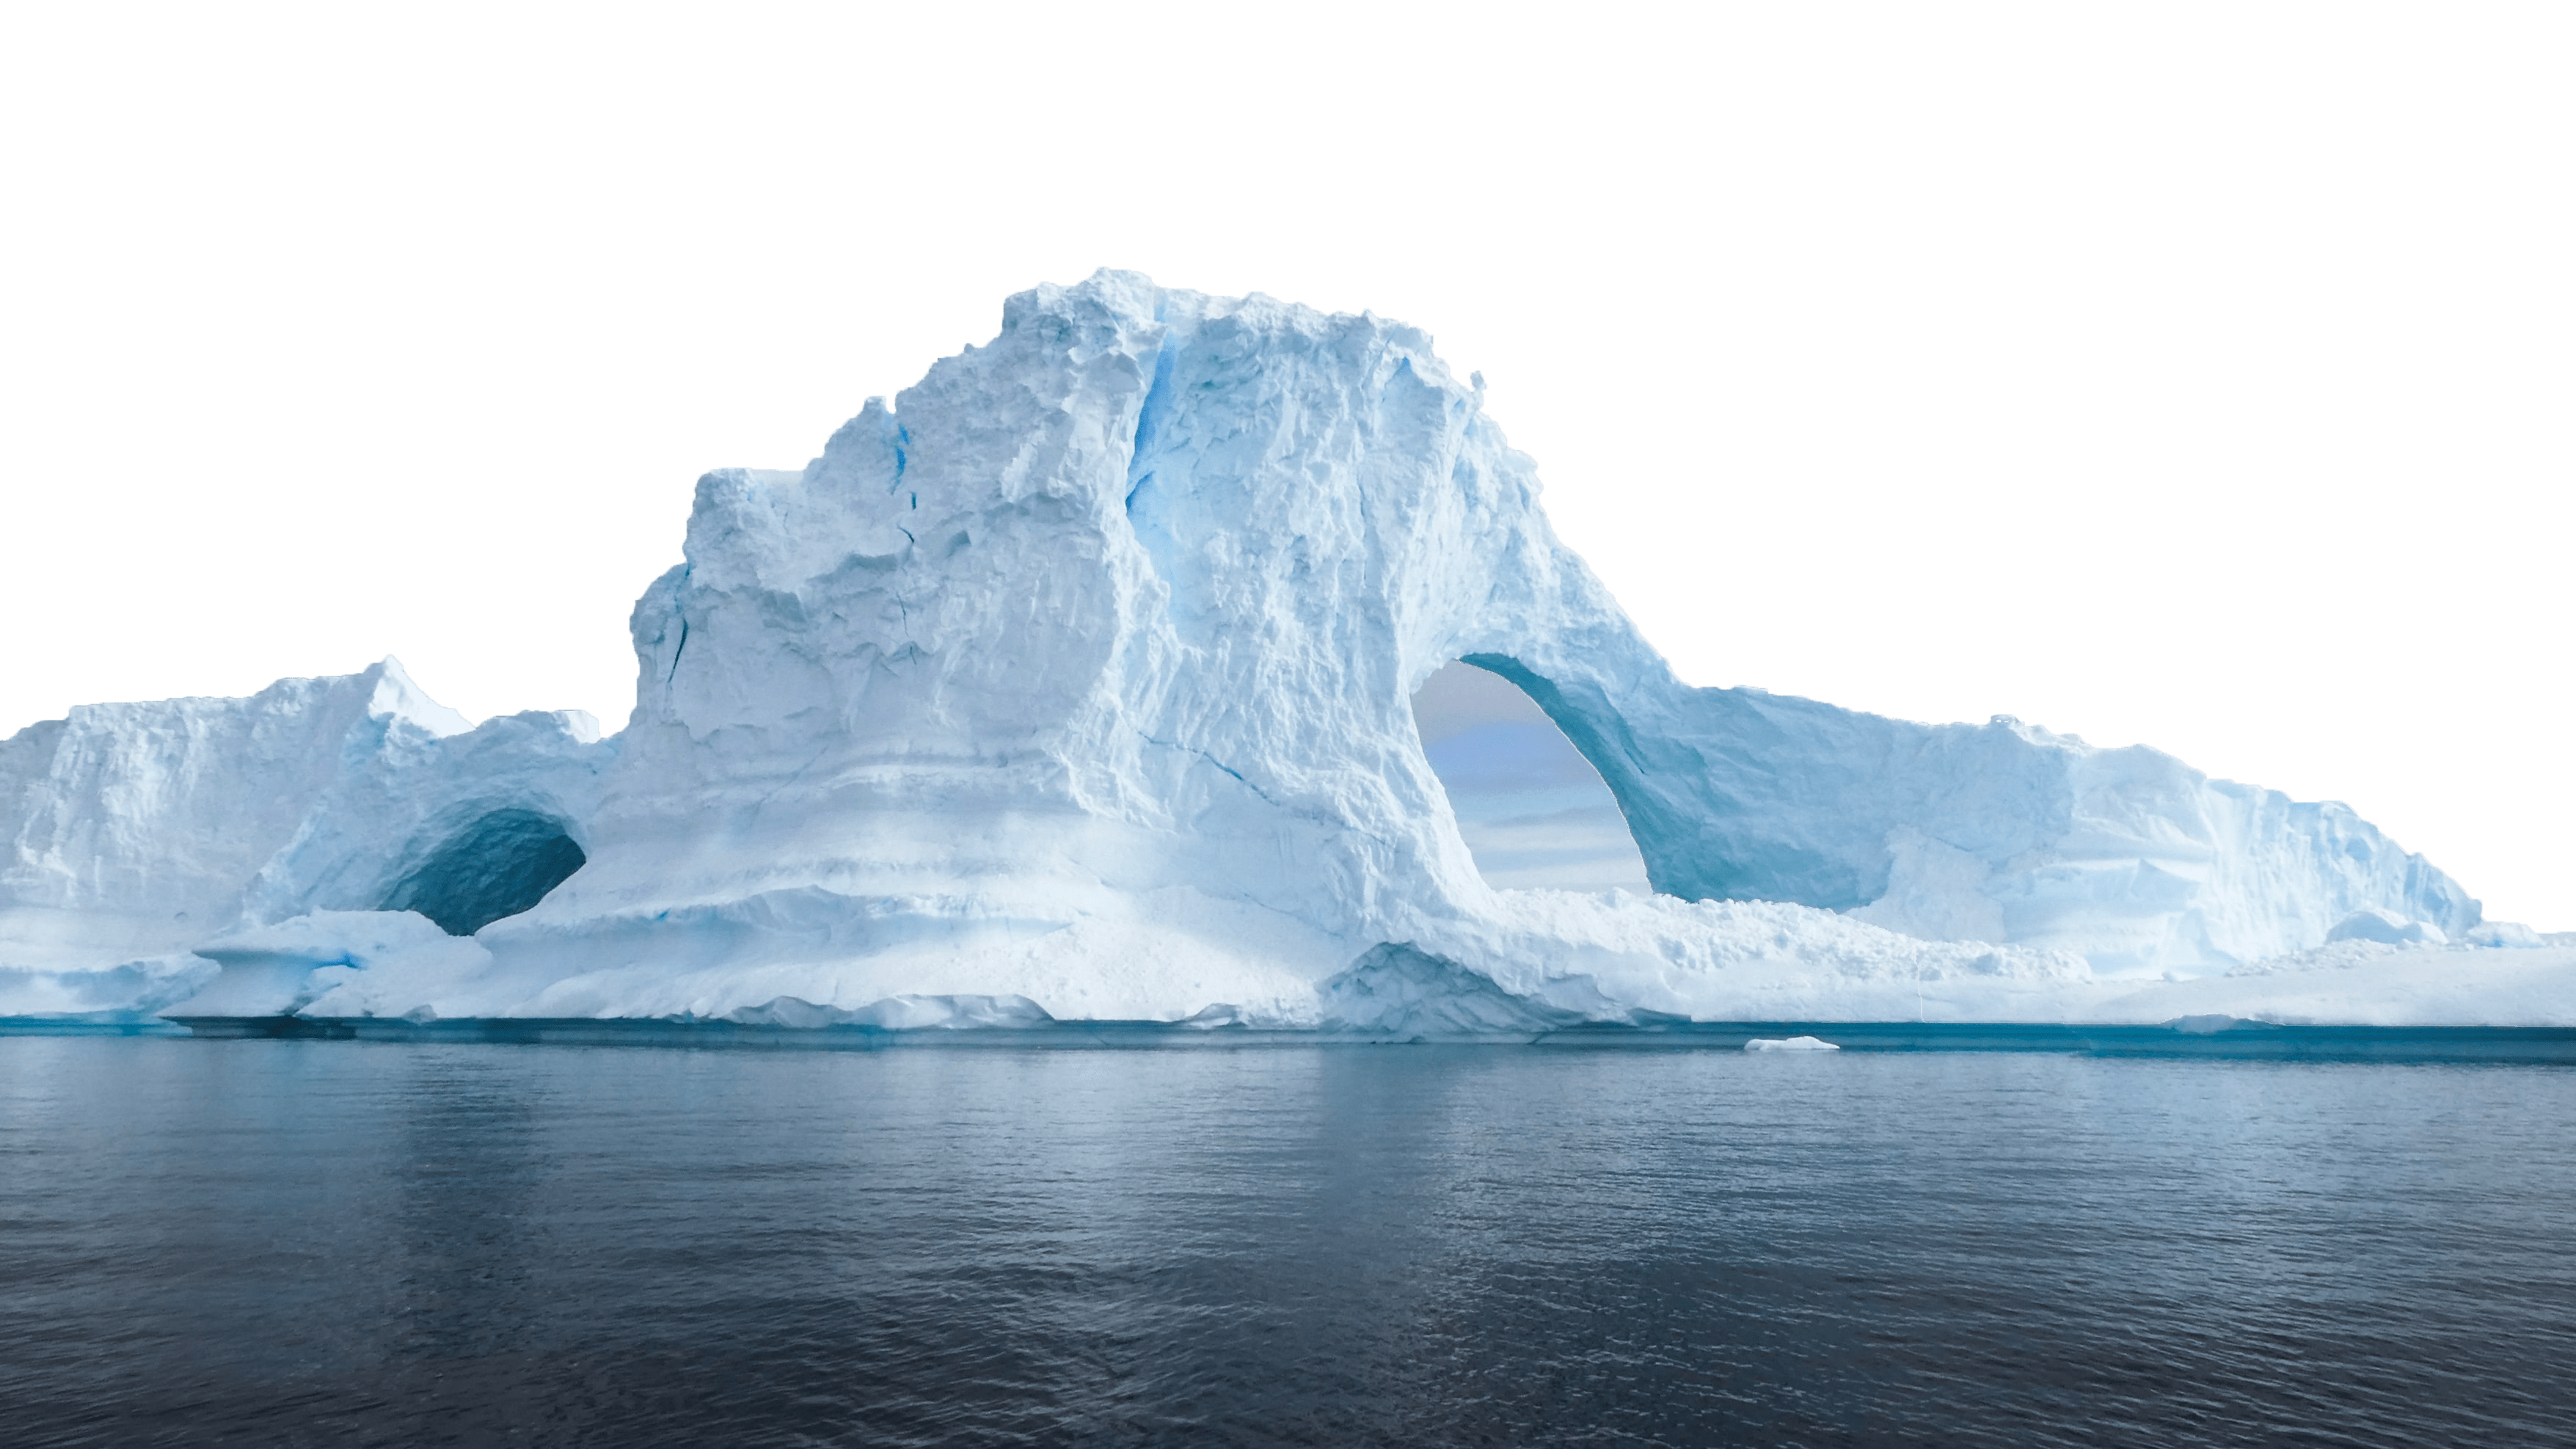 08 - Antarctica